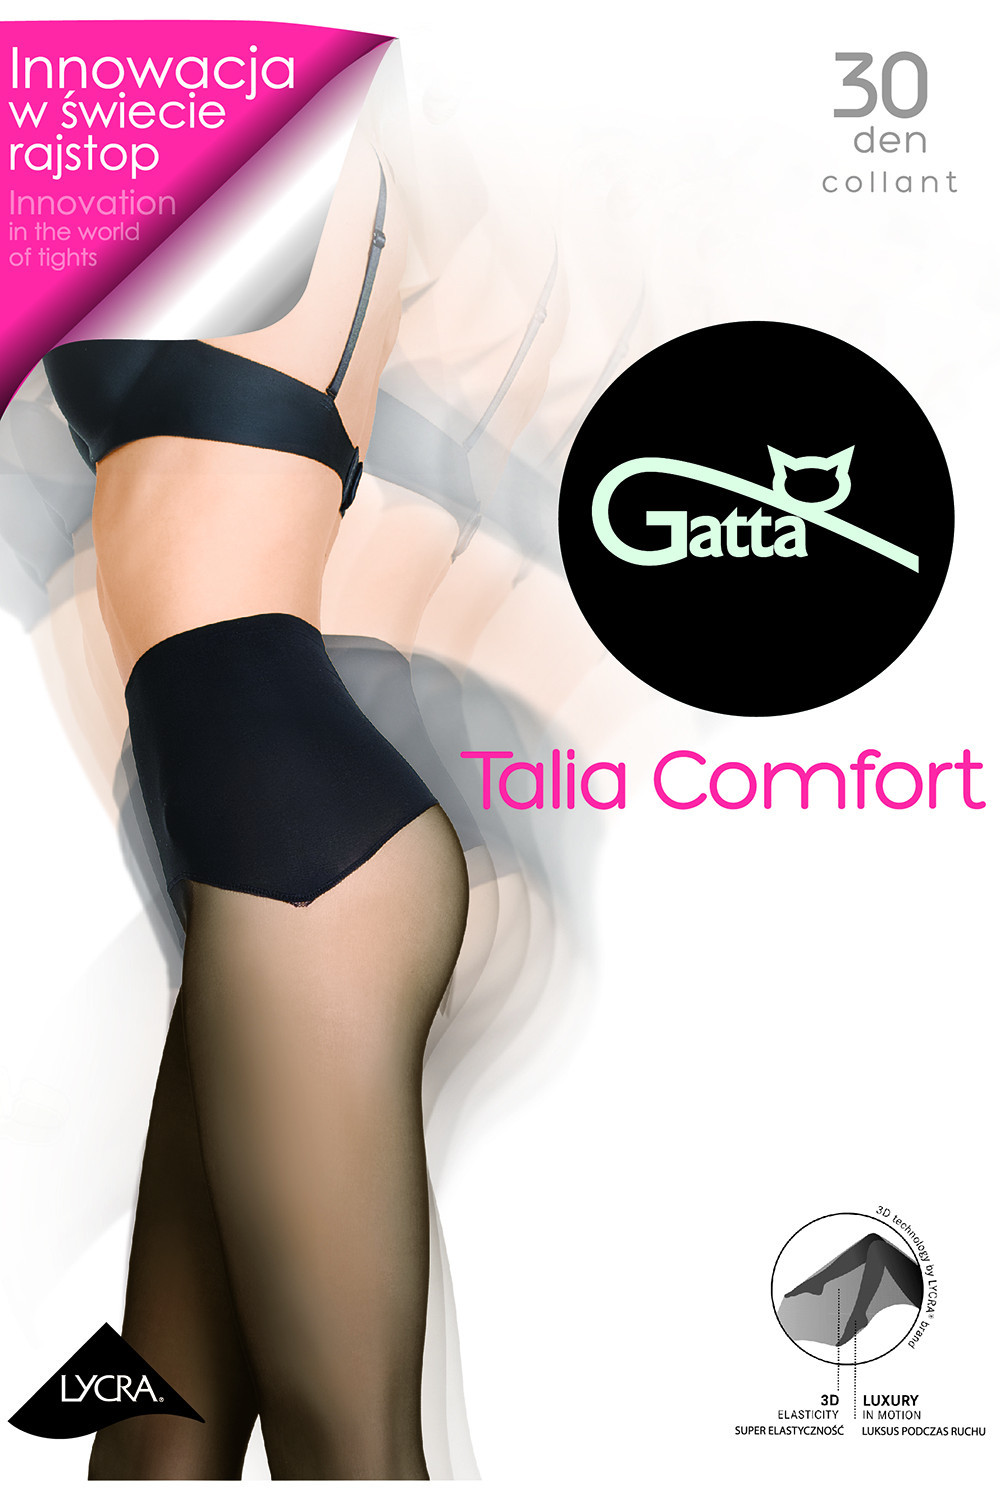 Gatta Talia Comfort kolor:nero 1-2